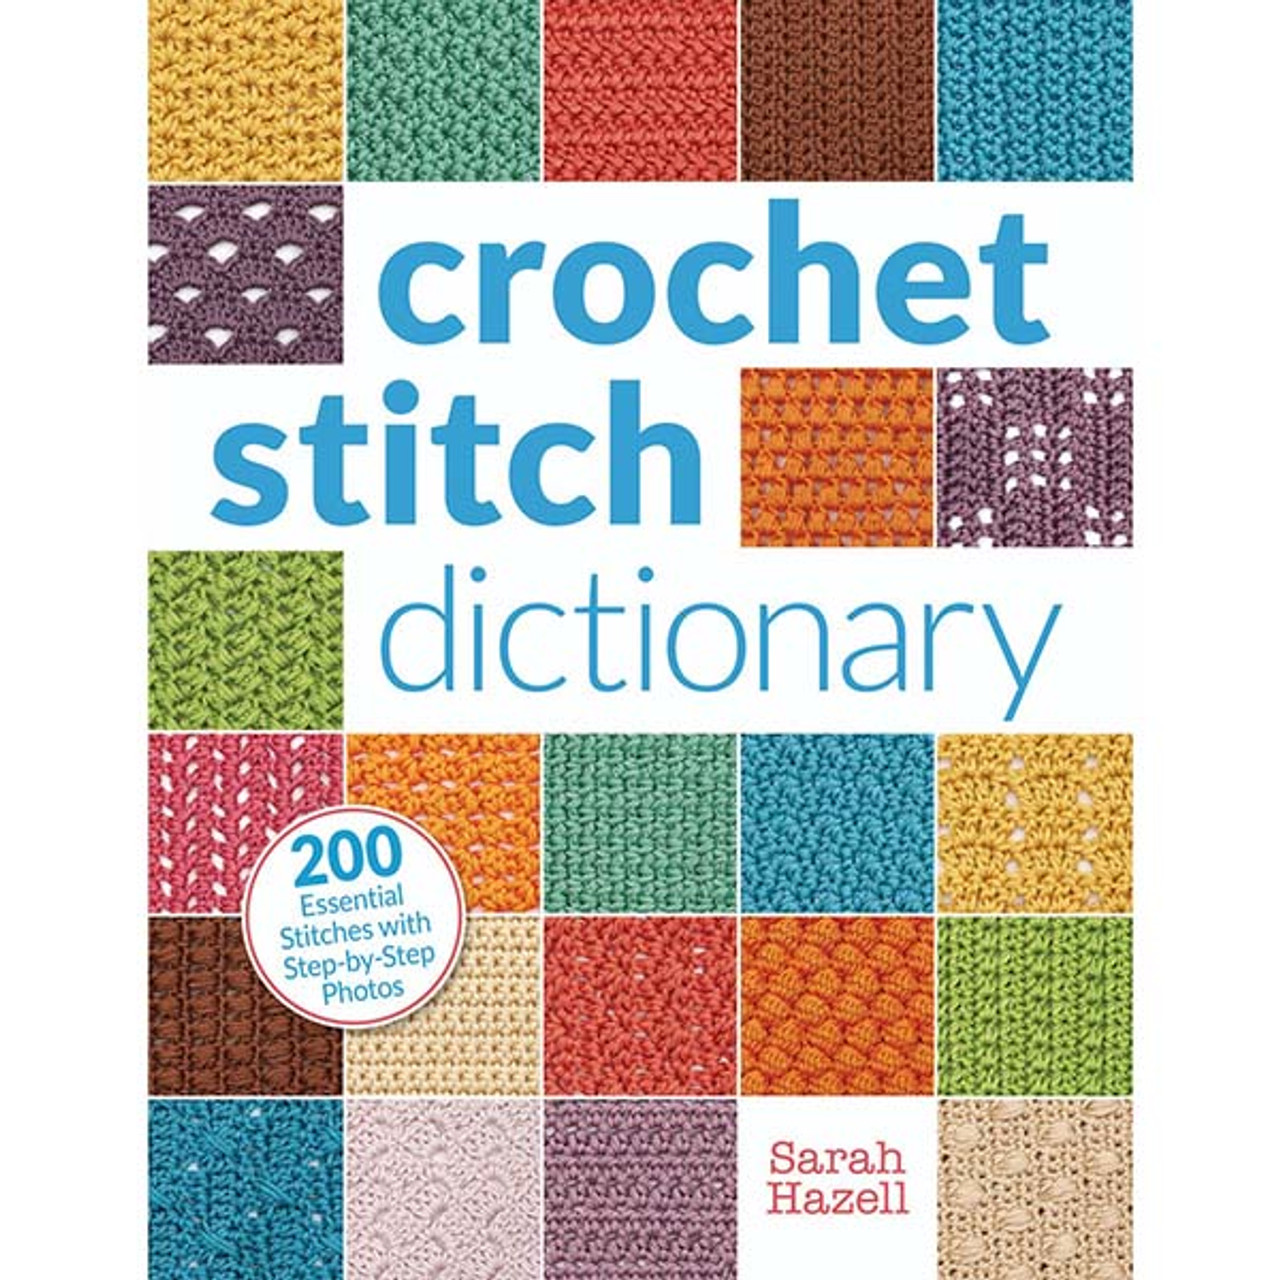 Crochet Stitch Dictionary by Sarah Hazell